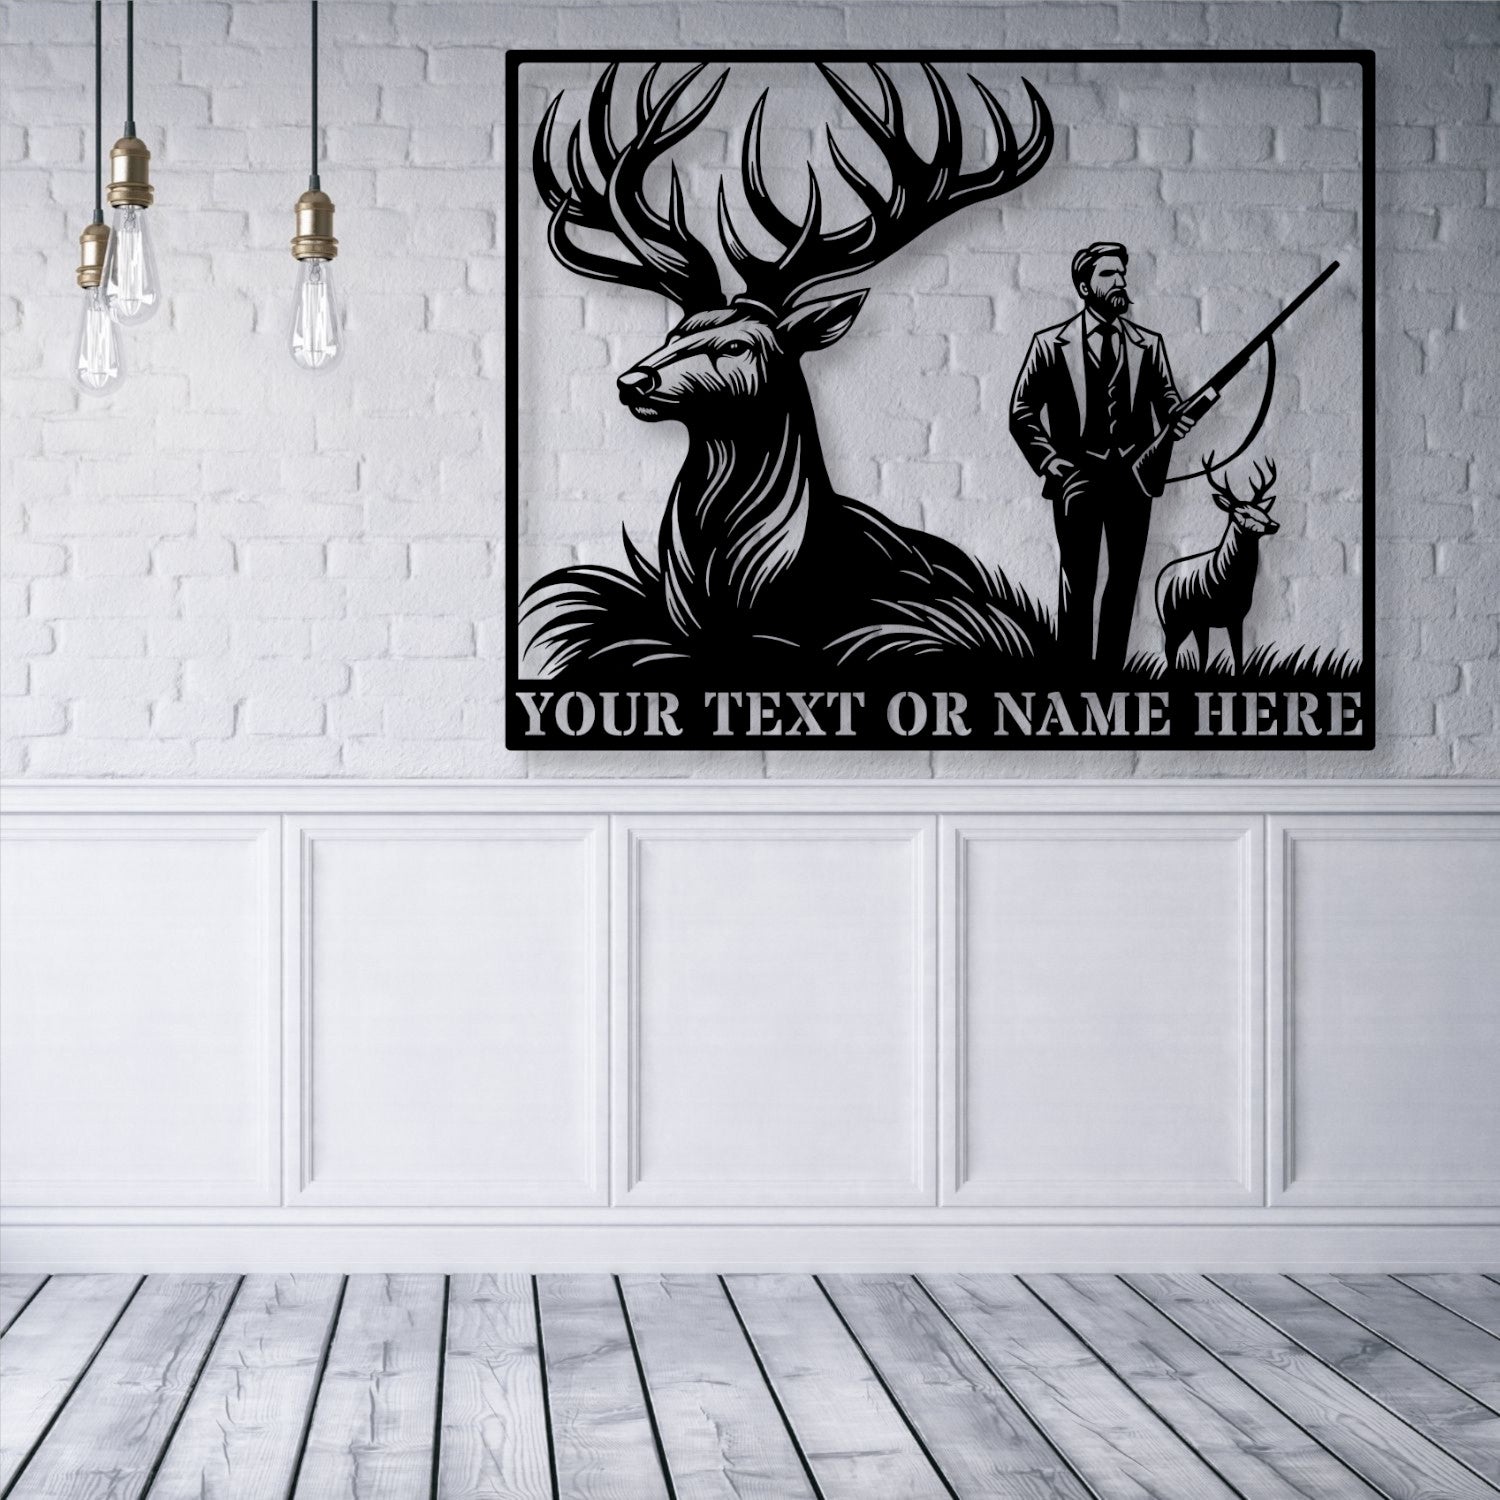 Personalized Hunting Cabin Name Metal Sign. Custom Deer Hunter Wall Decor Gift. Huntsman Wall Hanging. Hunting Lodge Decoration Gift. Personal Cabin Decor Gift